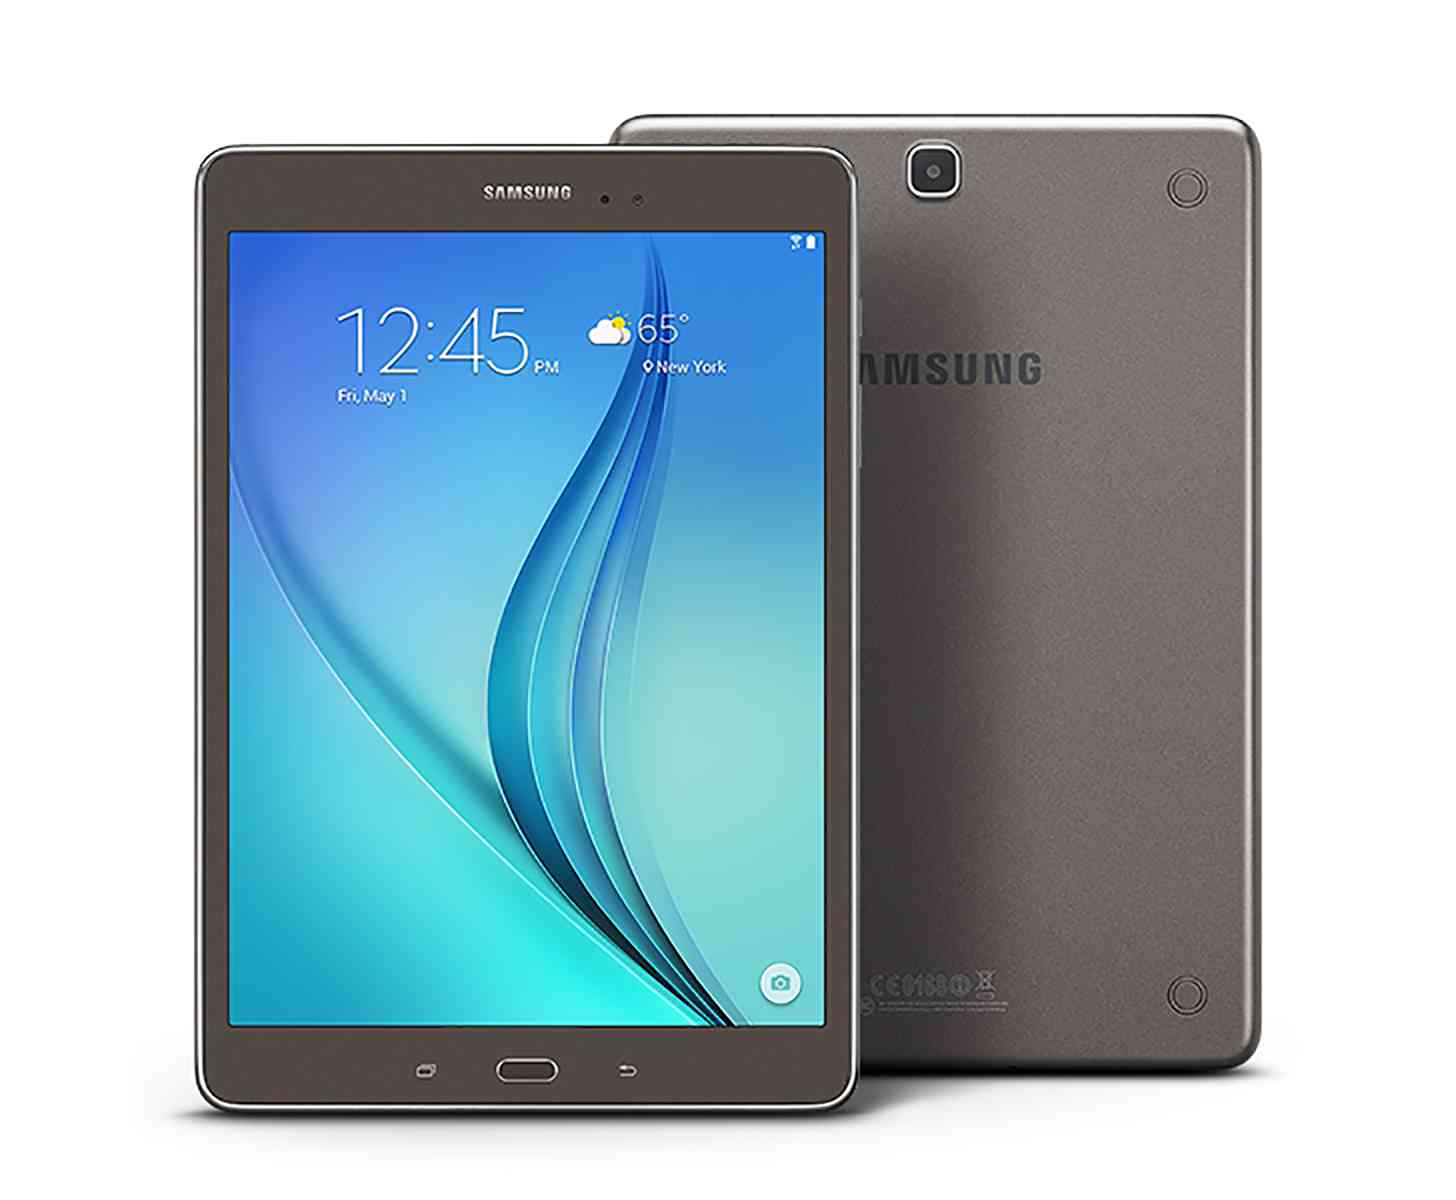 Samsung Galaxy Tab A 9.7 Smoky Graphite official